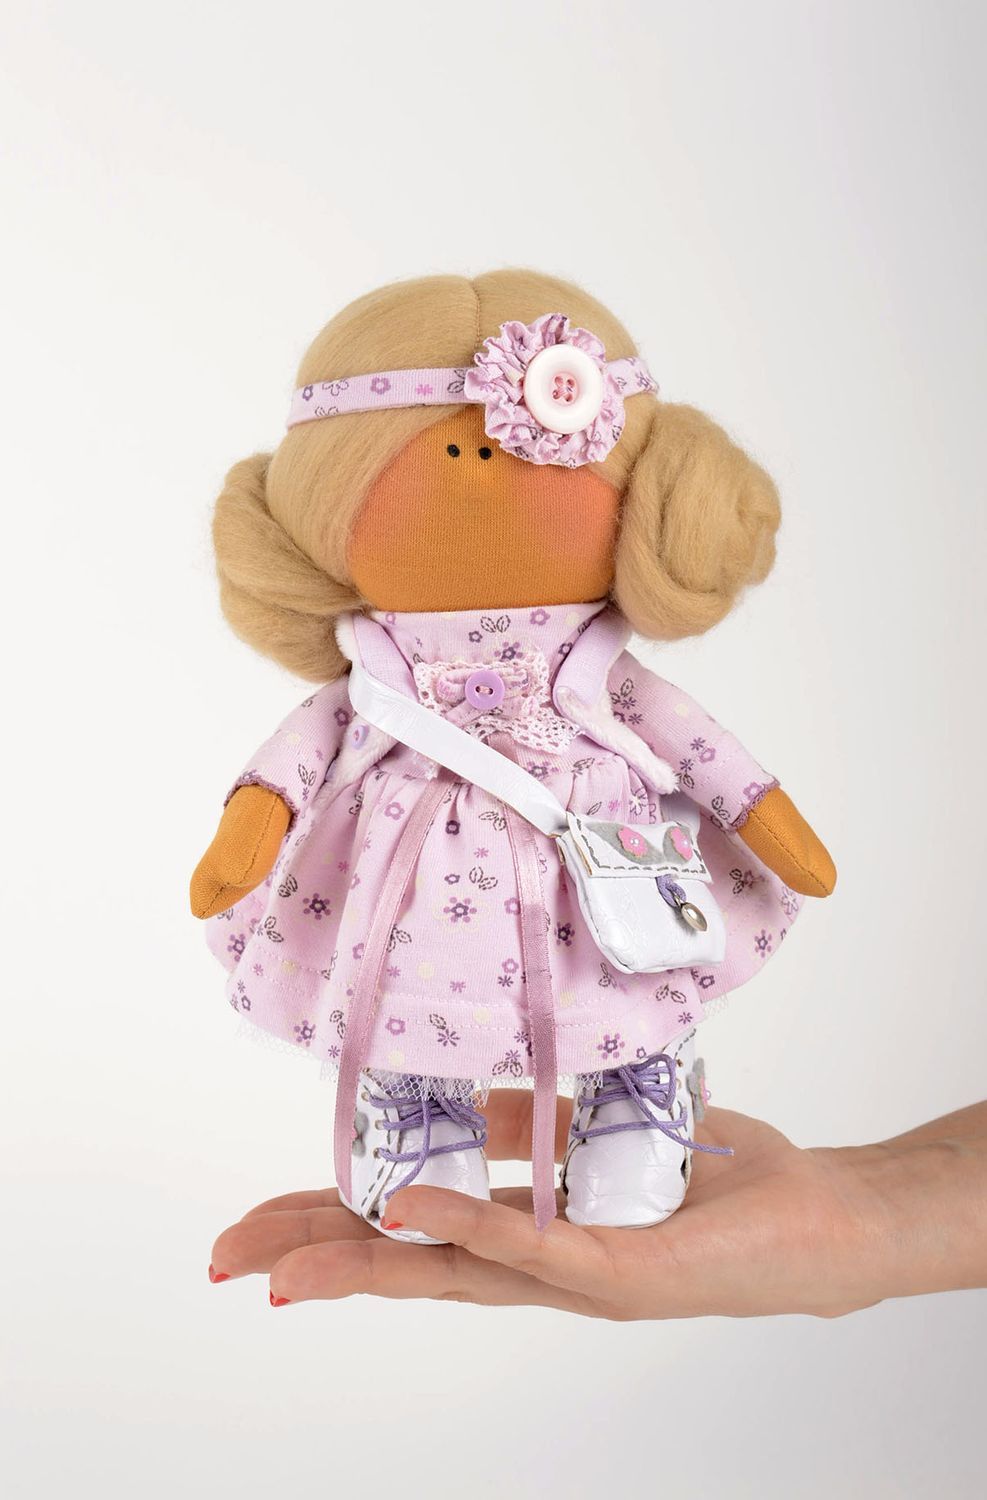 Handmade soft doll girl doll stuffed toys home decor best gifts for girls photo 4